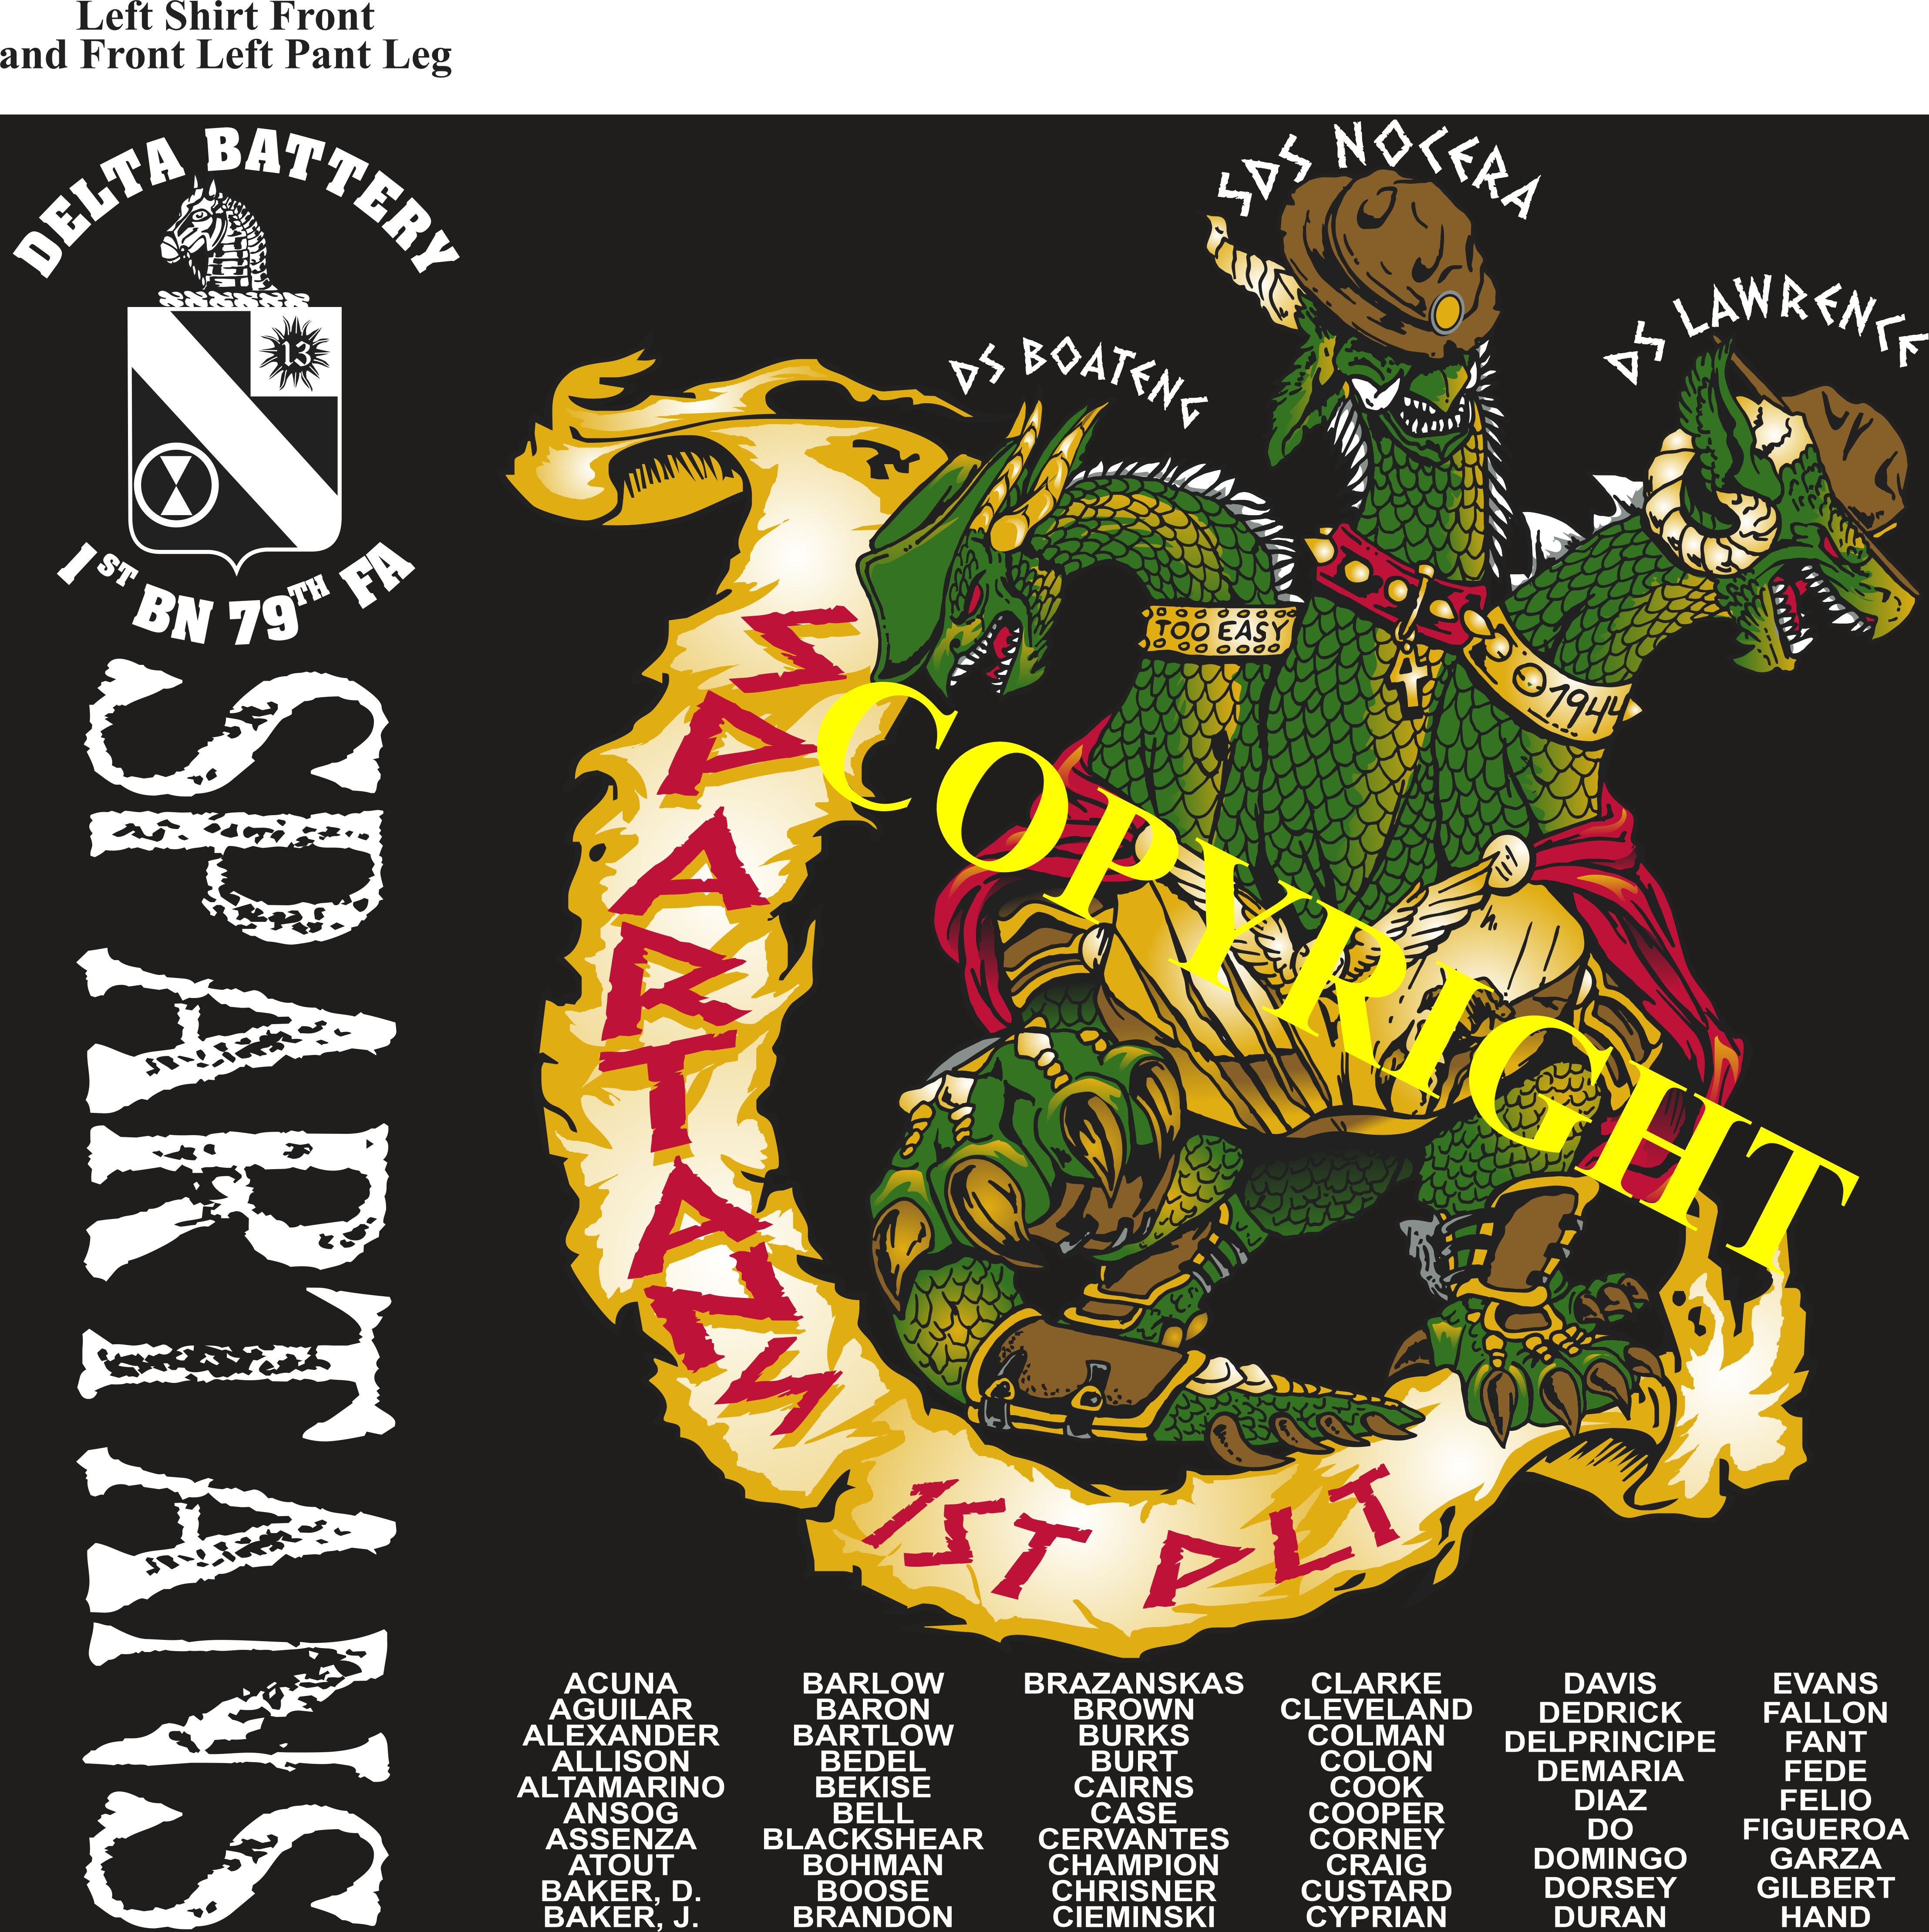 Platoon Shirts (2nd generation print) DELTA 1st 79th SPARTANS FEB 2020